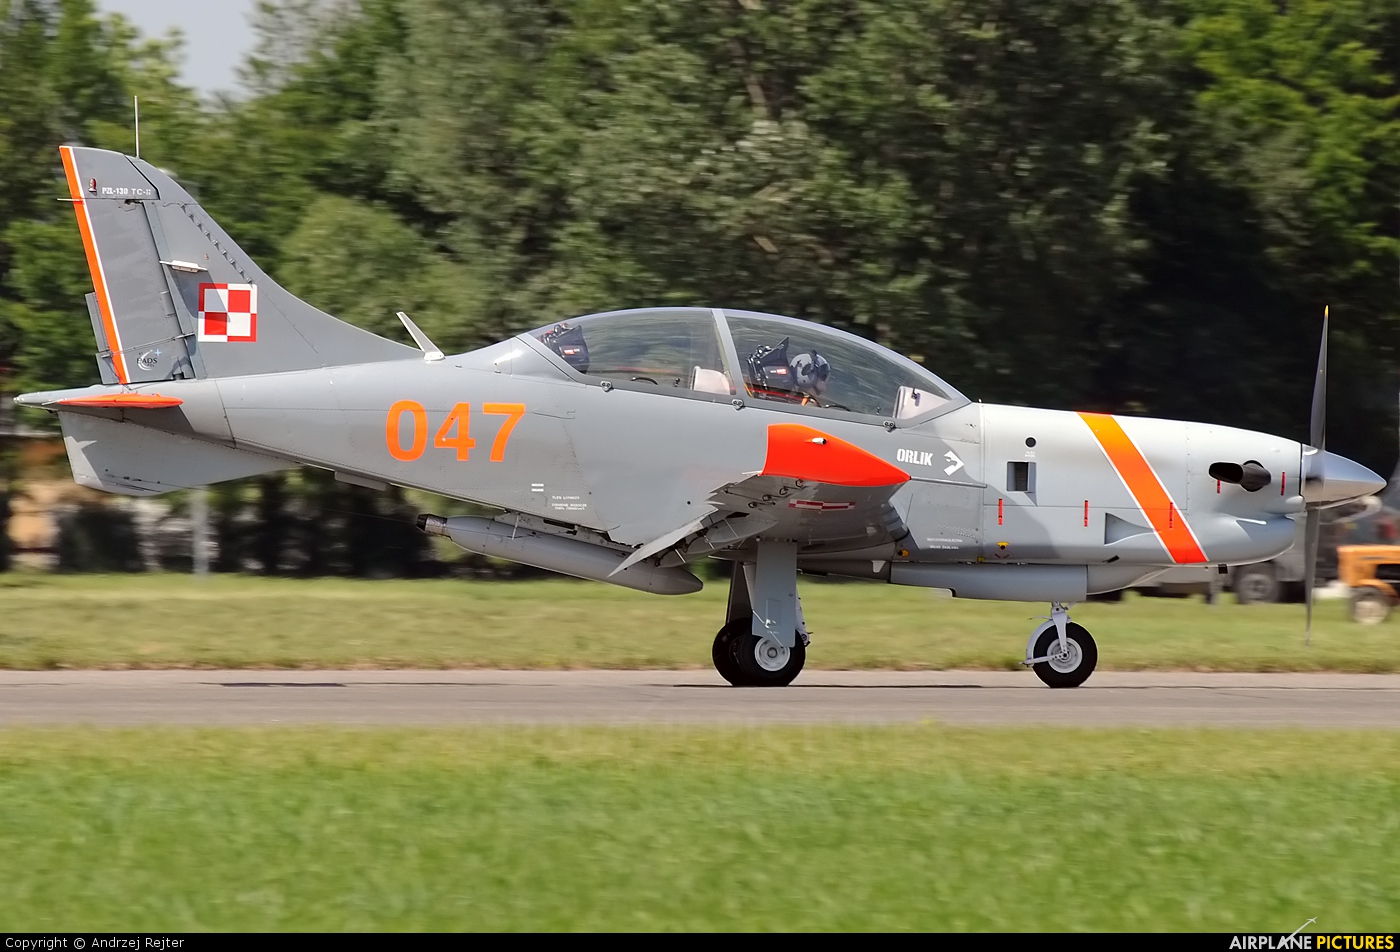 Poland - Air Force "Orlik Acrobatic Group" 047 aircraft at Radom - Sadków